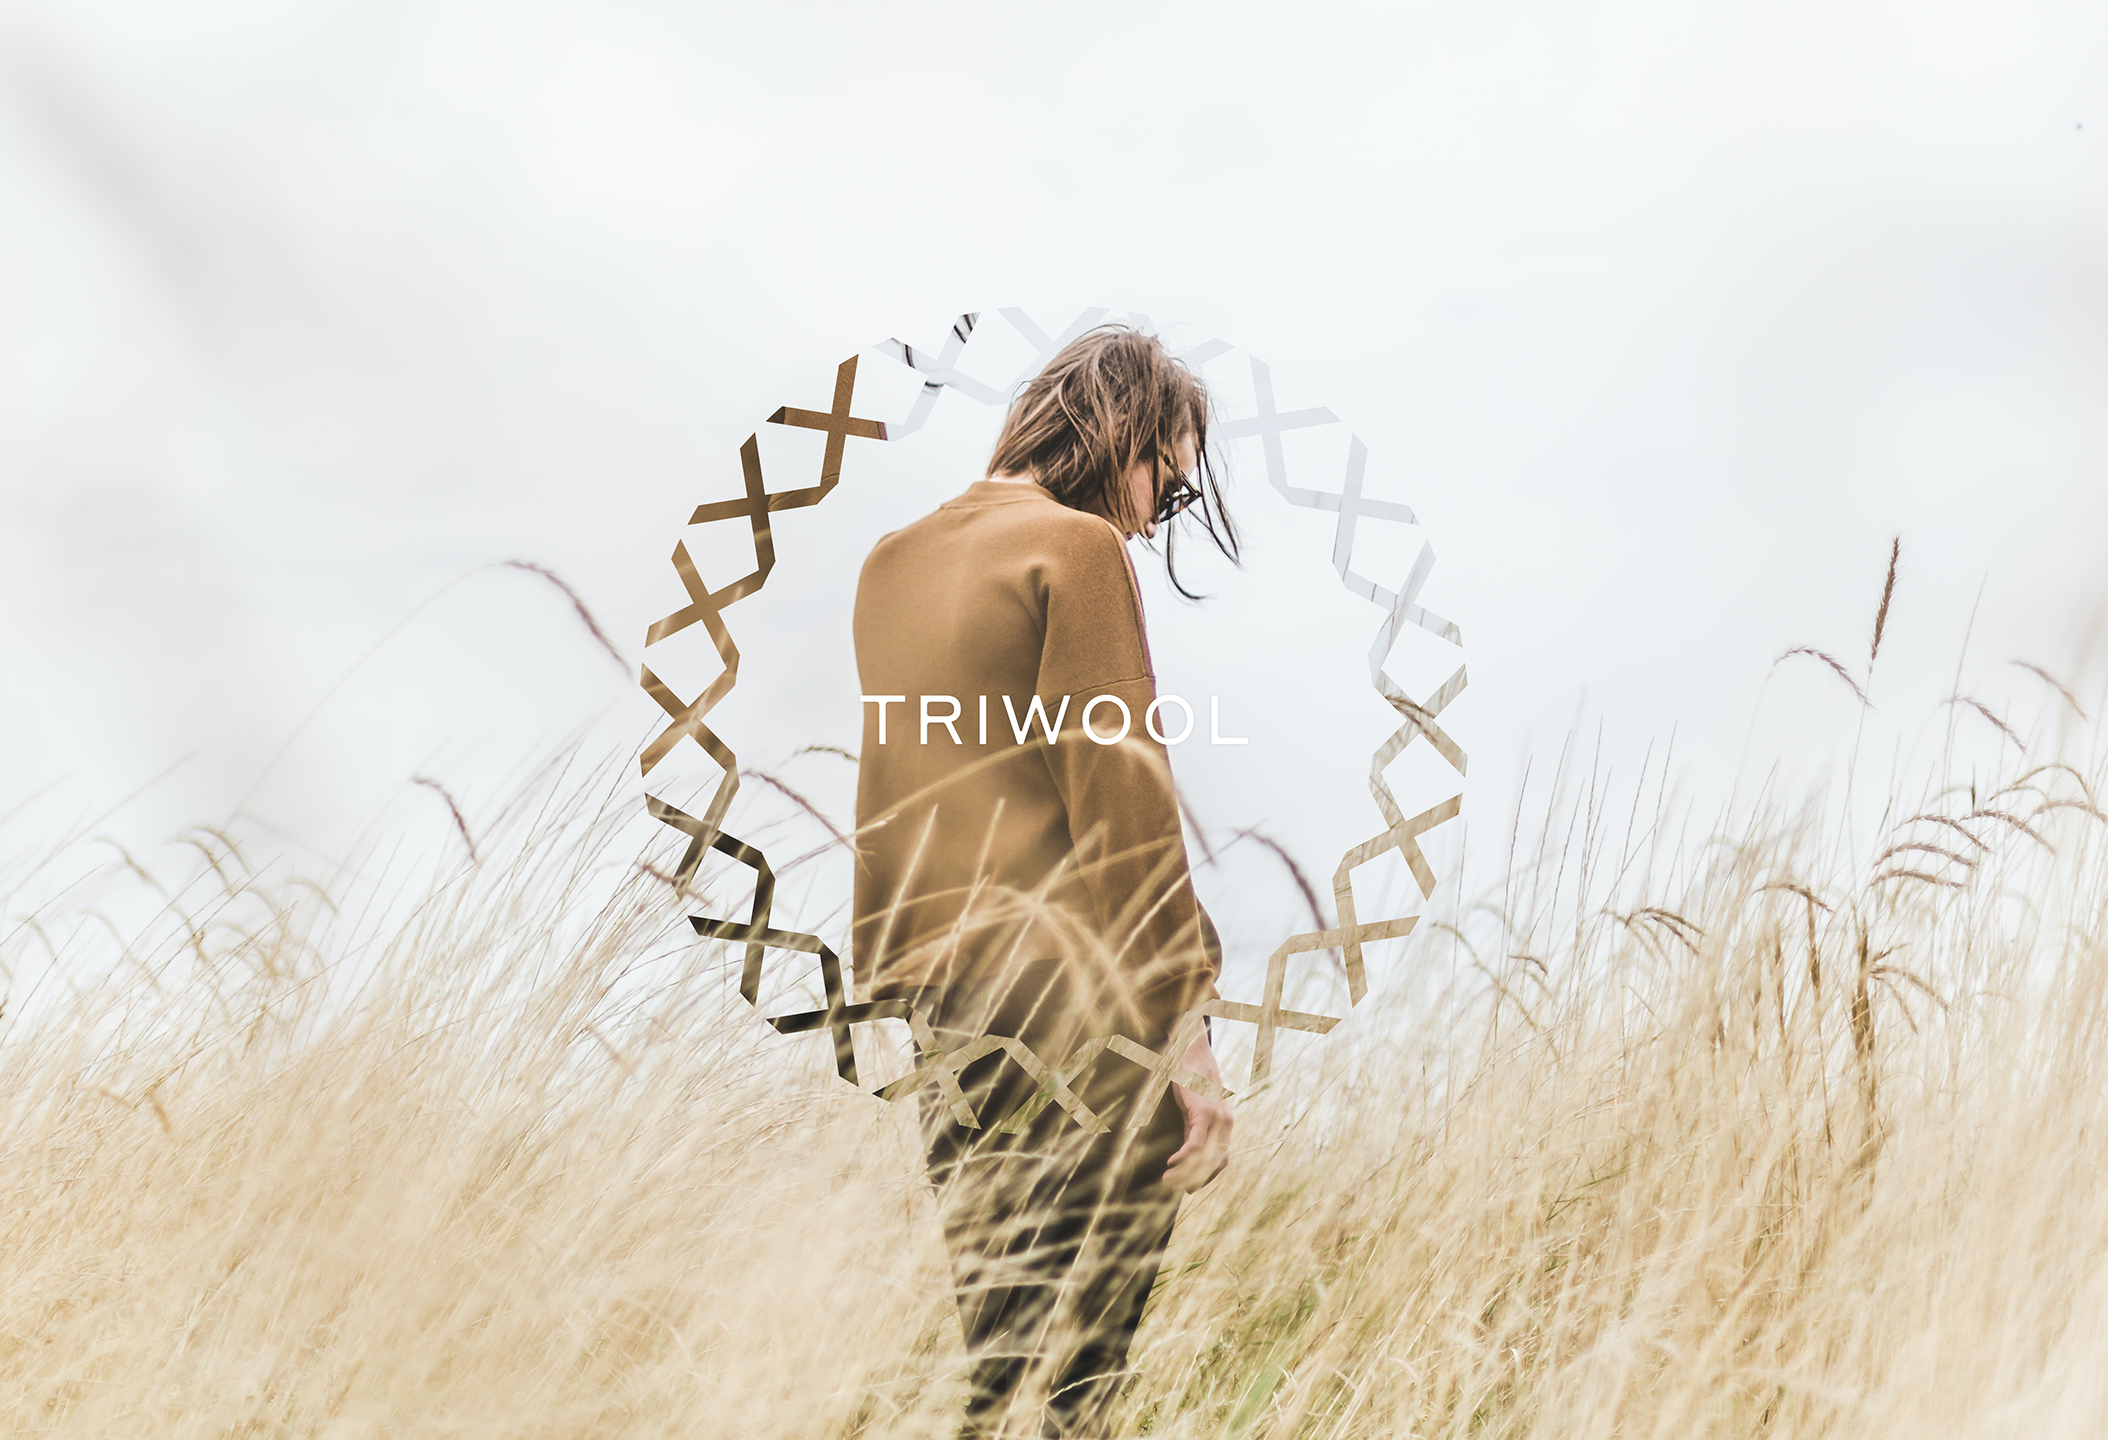 Volta Studio Creates Triwool’s Brand Identity